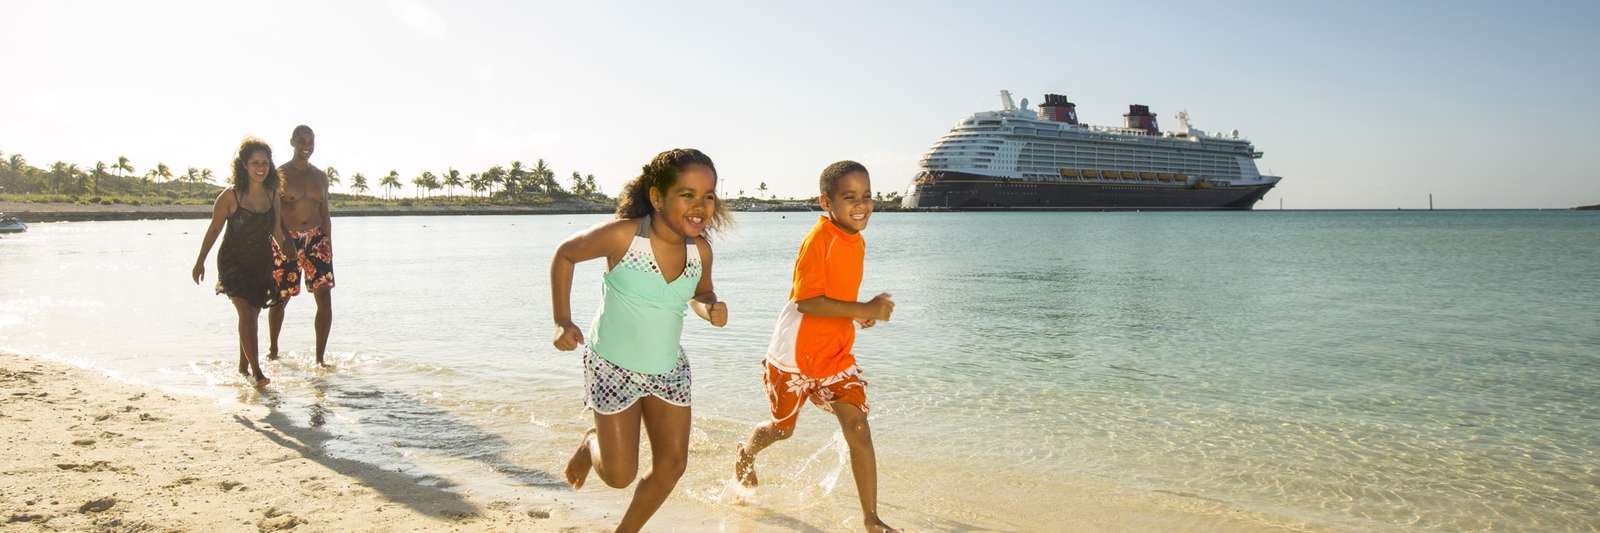 Disney Cruise Line Cruises